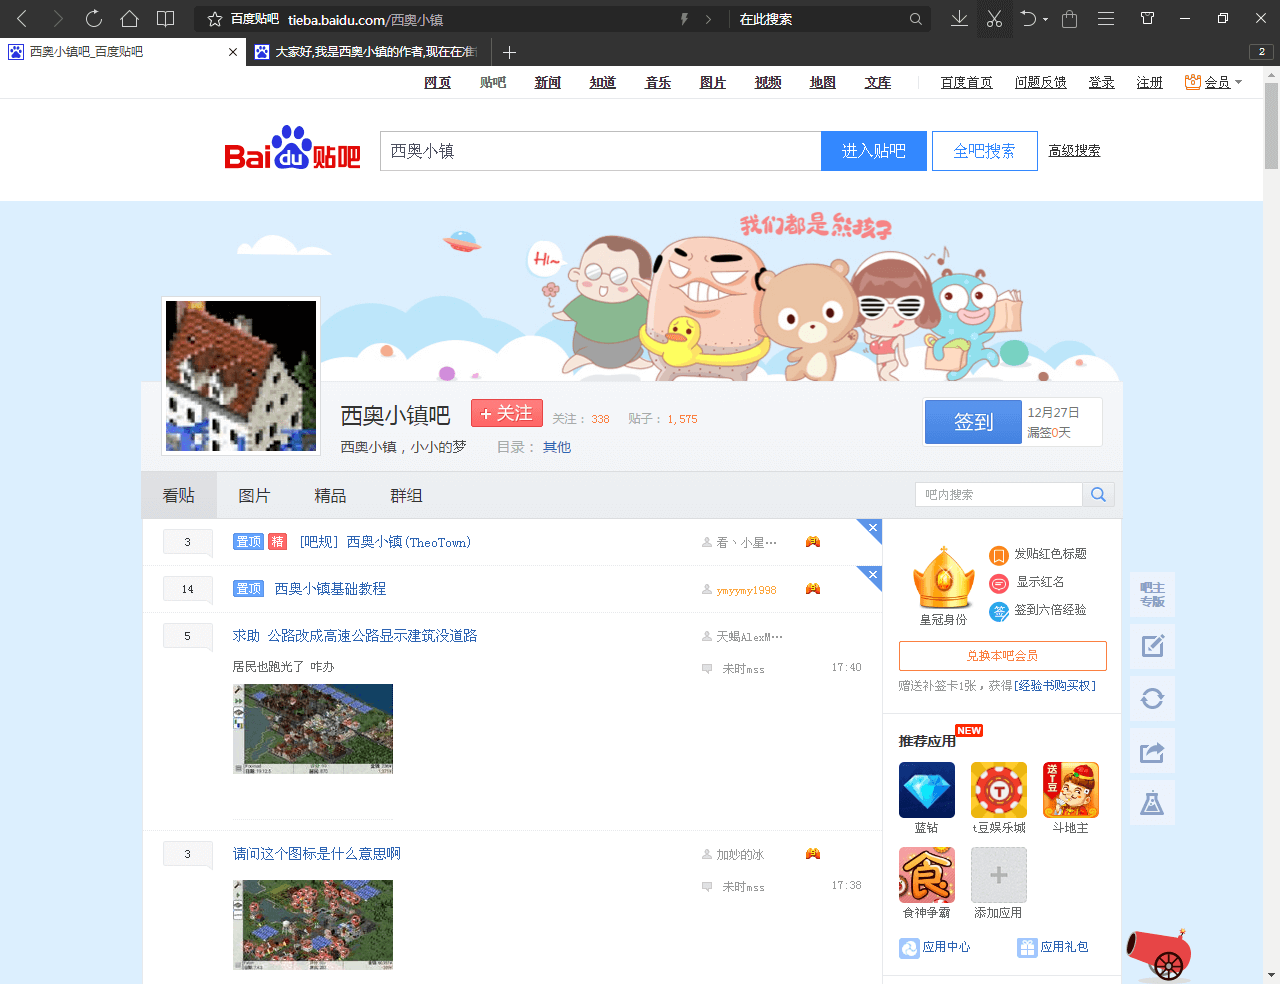 Baidu Tieba social network